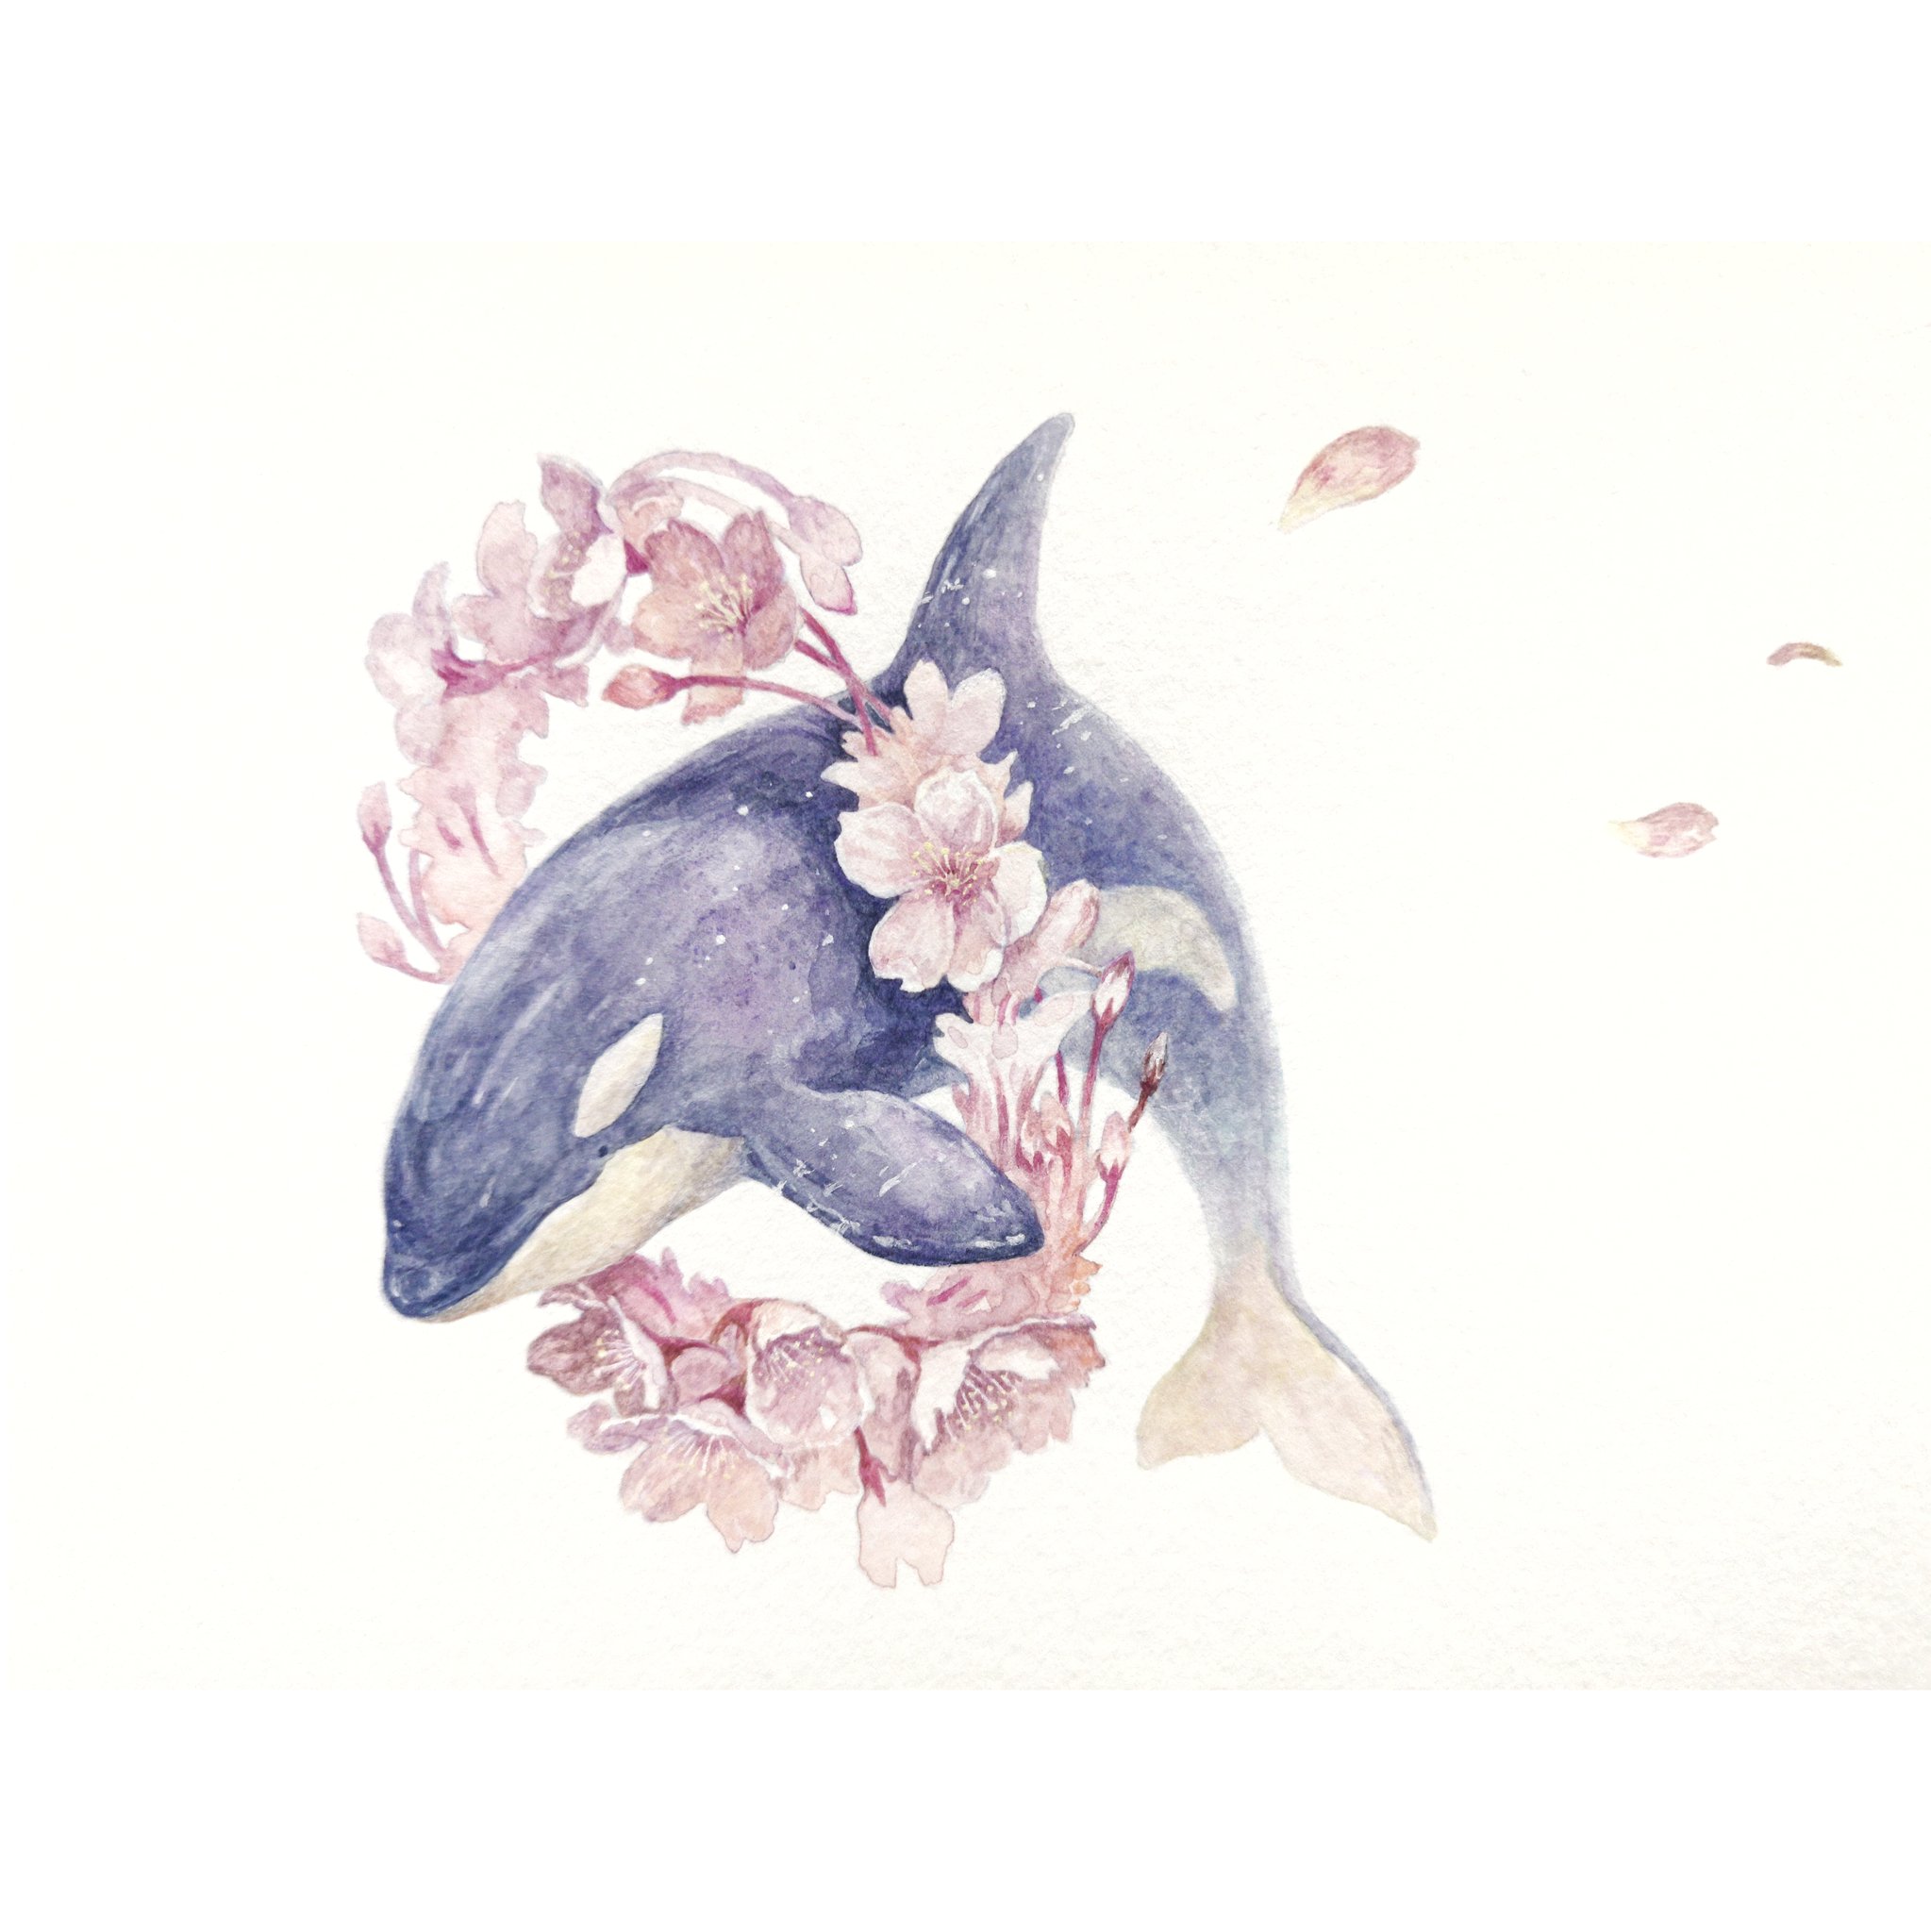 Hirotoshi Kanou 桜にシャチ 透明水彩 シャチ シャチ好き イラストすきな人と繋がりたい 絵描きさんと繫がりたい 桜すきな人と繋がりたい お花見 T Co Igz9qxm3fn Twitter